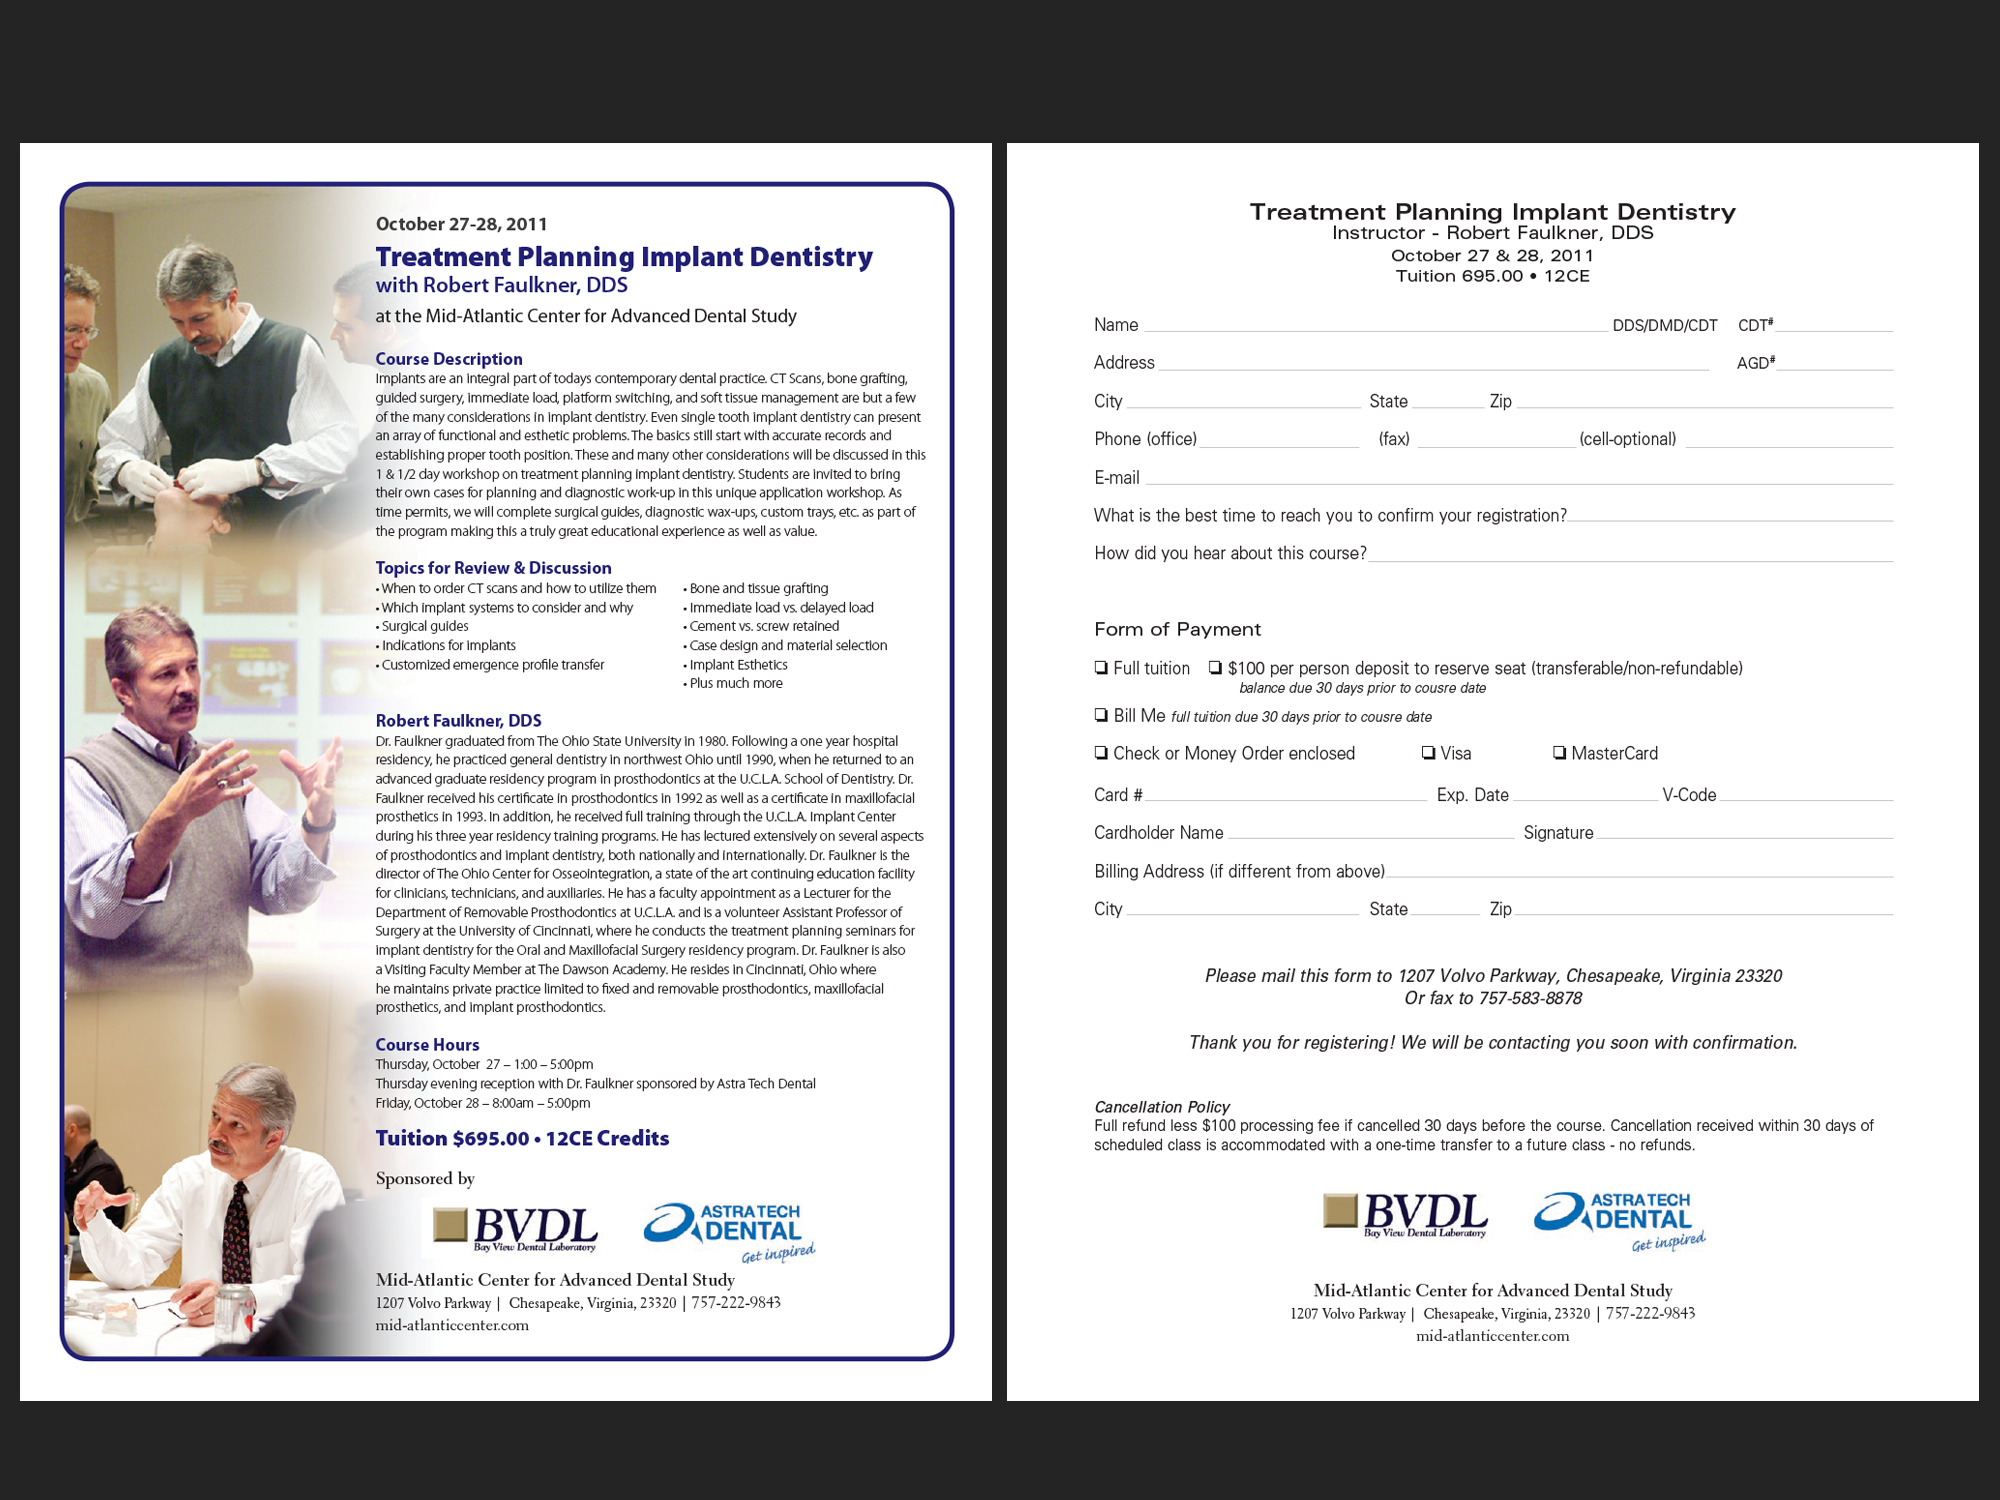 Treatment Planning Implant Dentistry - Mid-Atlantic Center, 2011; statement flyer.